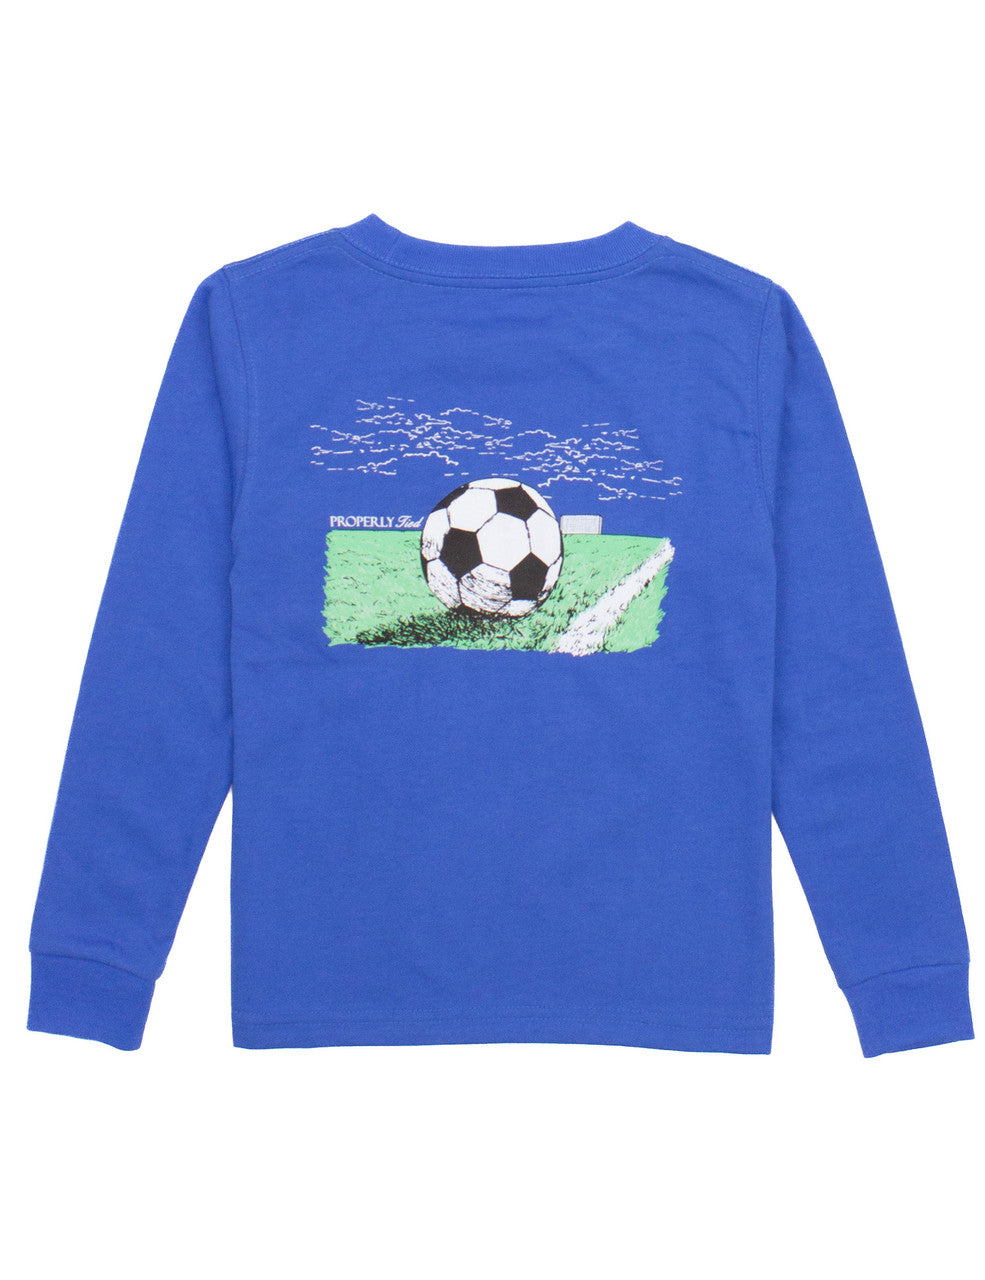 Boys Soccer - Bay Blue - Breckenridge Baby